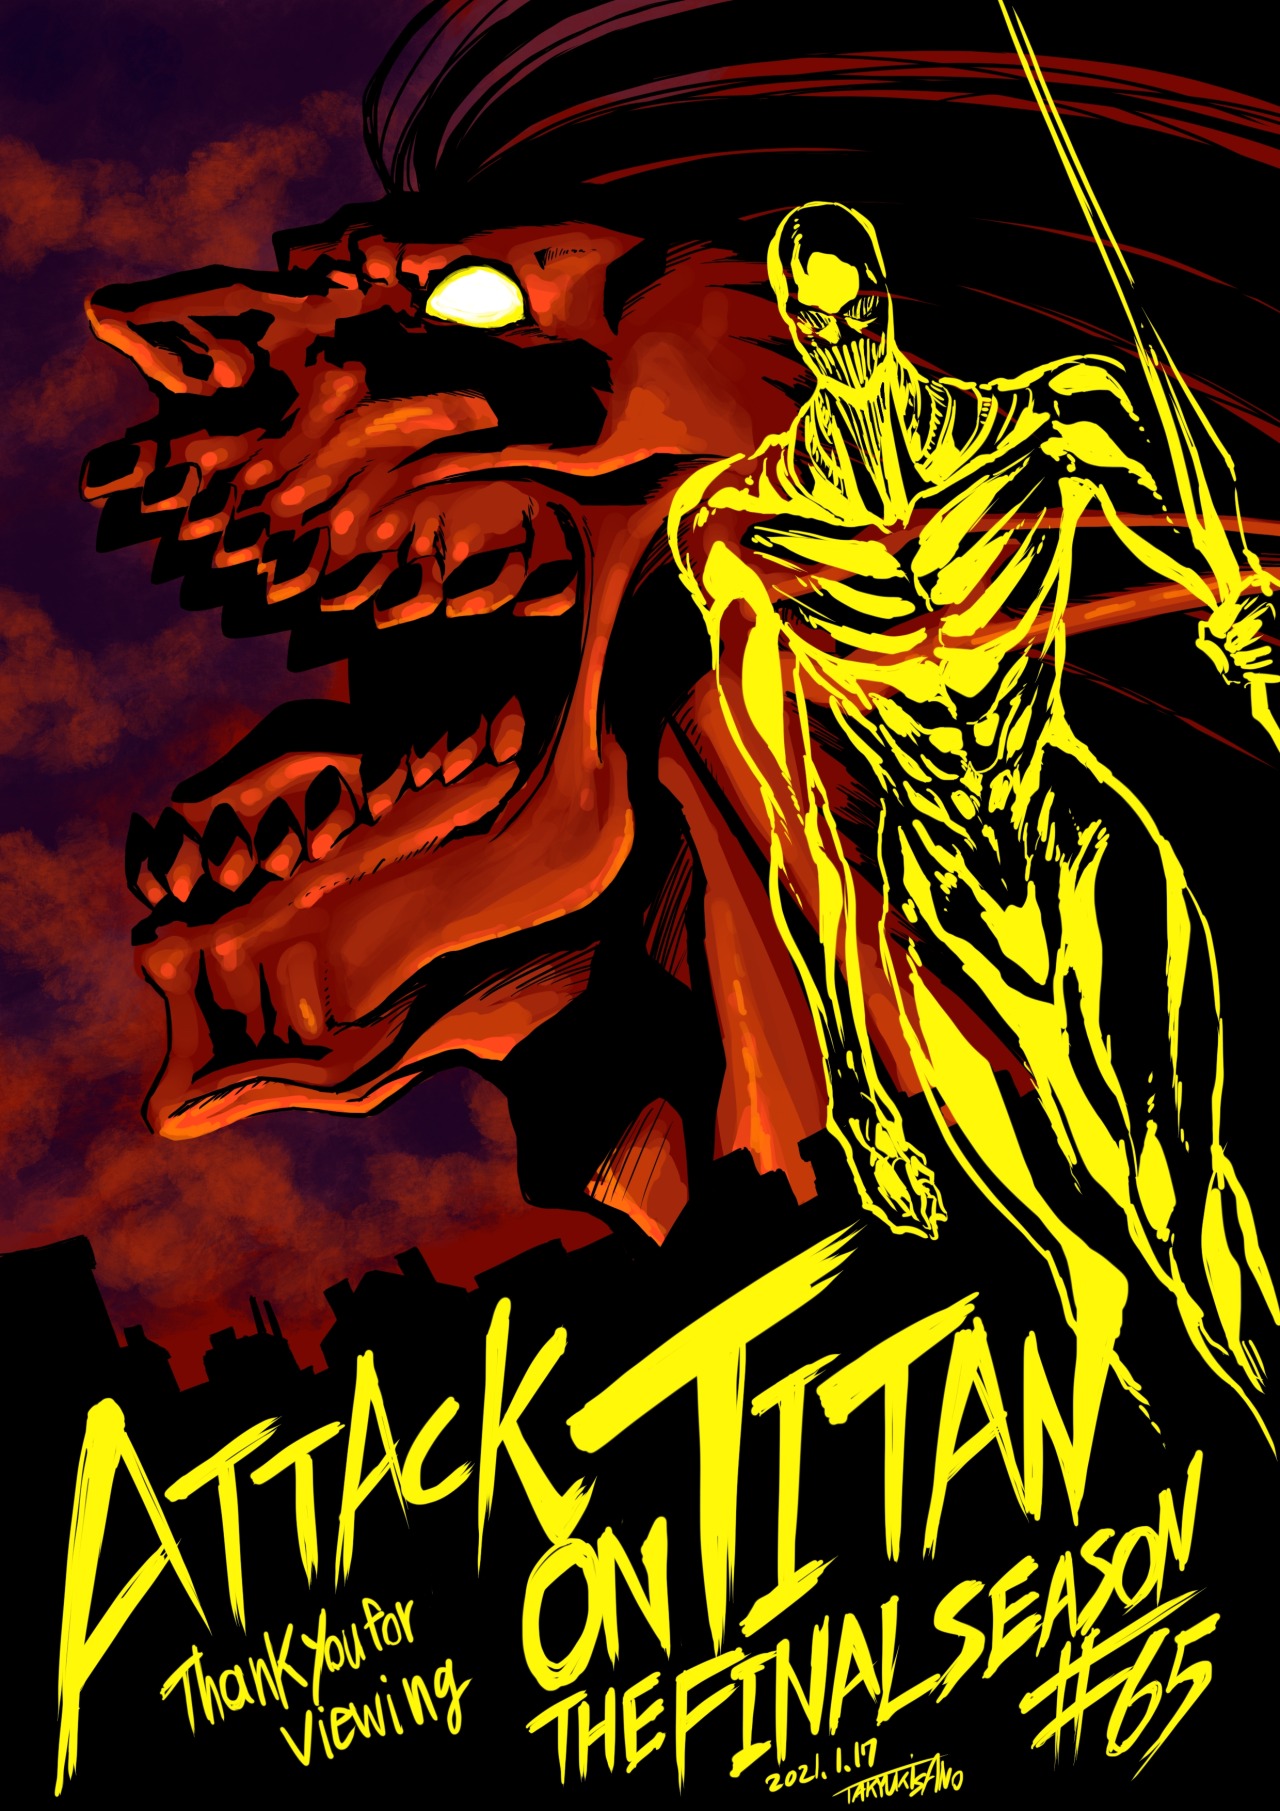 Poster Attack on Titan (Shingeki no kyojin) - Titan | Wall Art, Gifts &  Merchandise 